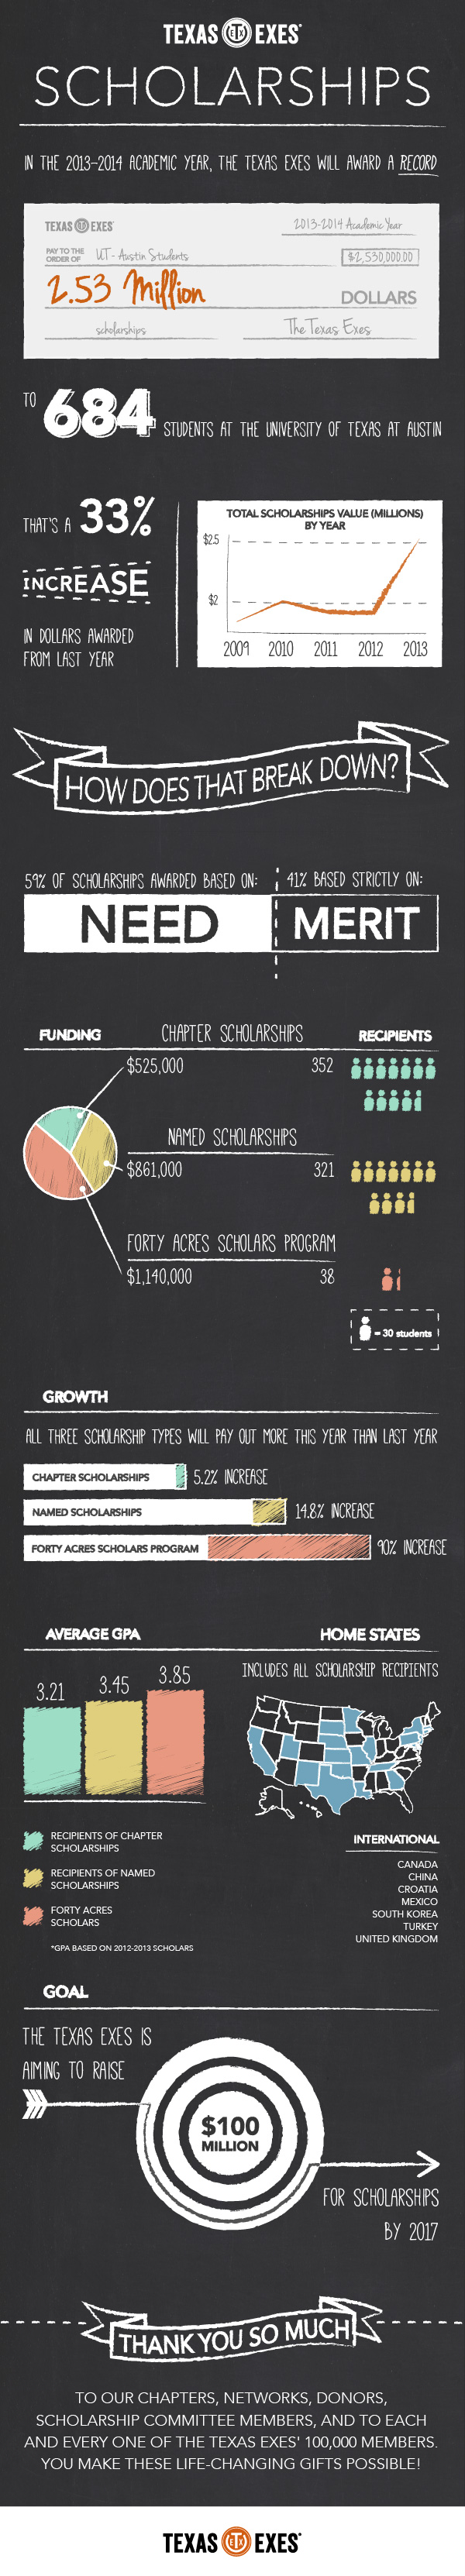 2013-2014 Scholarship Infographic